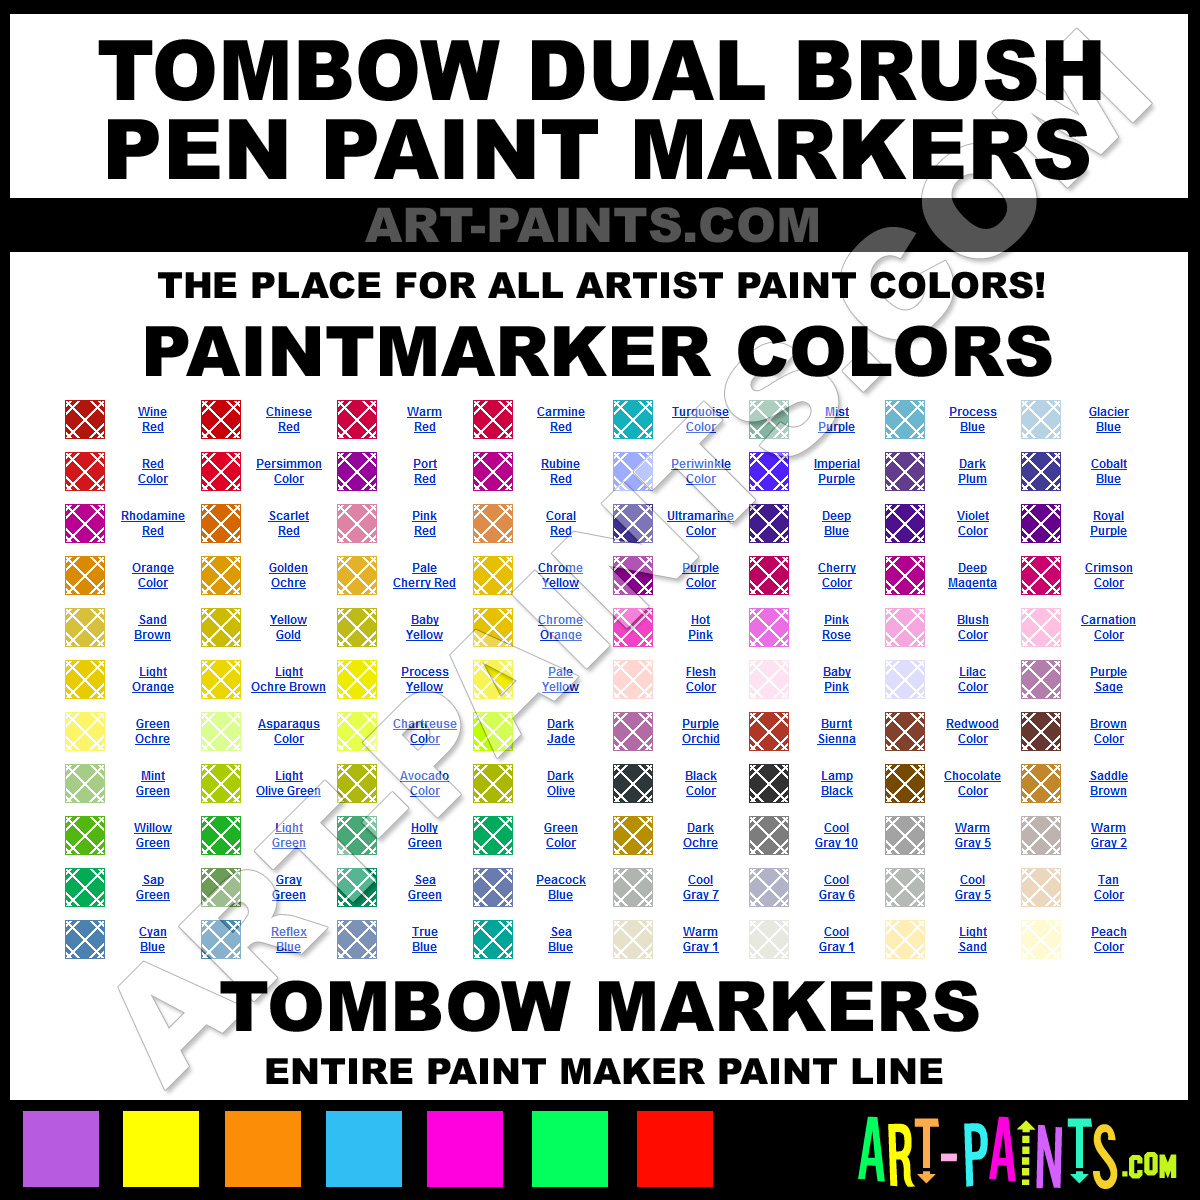 http://www.art-paints.com/Paints/Marker/Tombow/Tombow-Dual-Brush-Pens.jpg